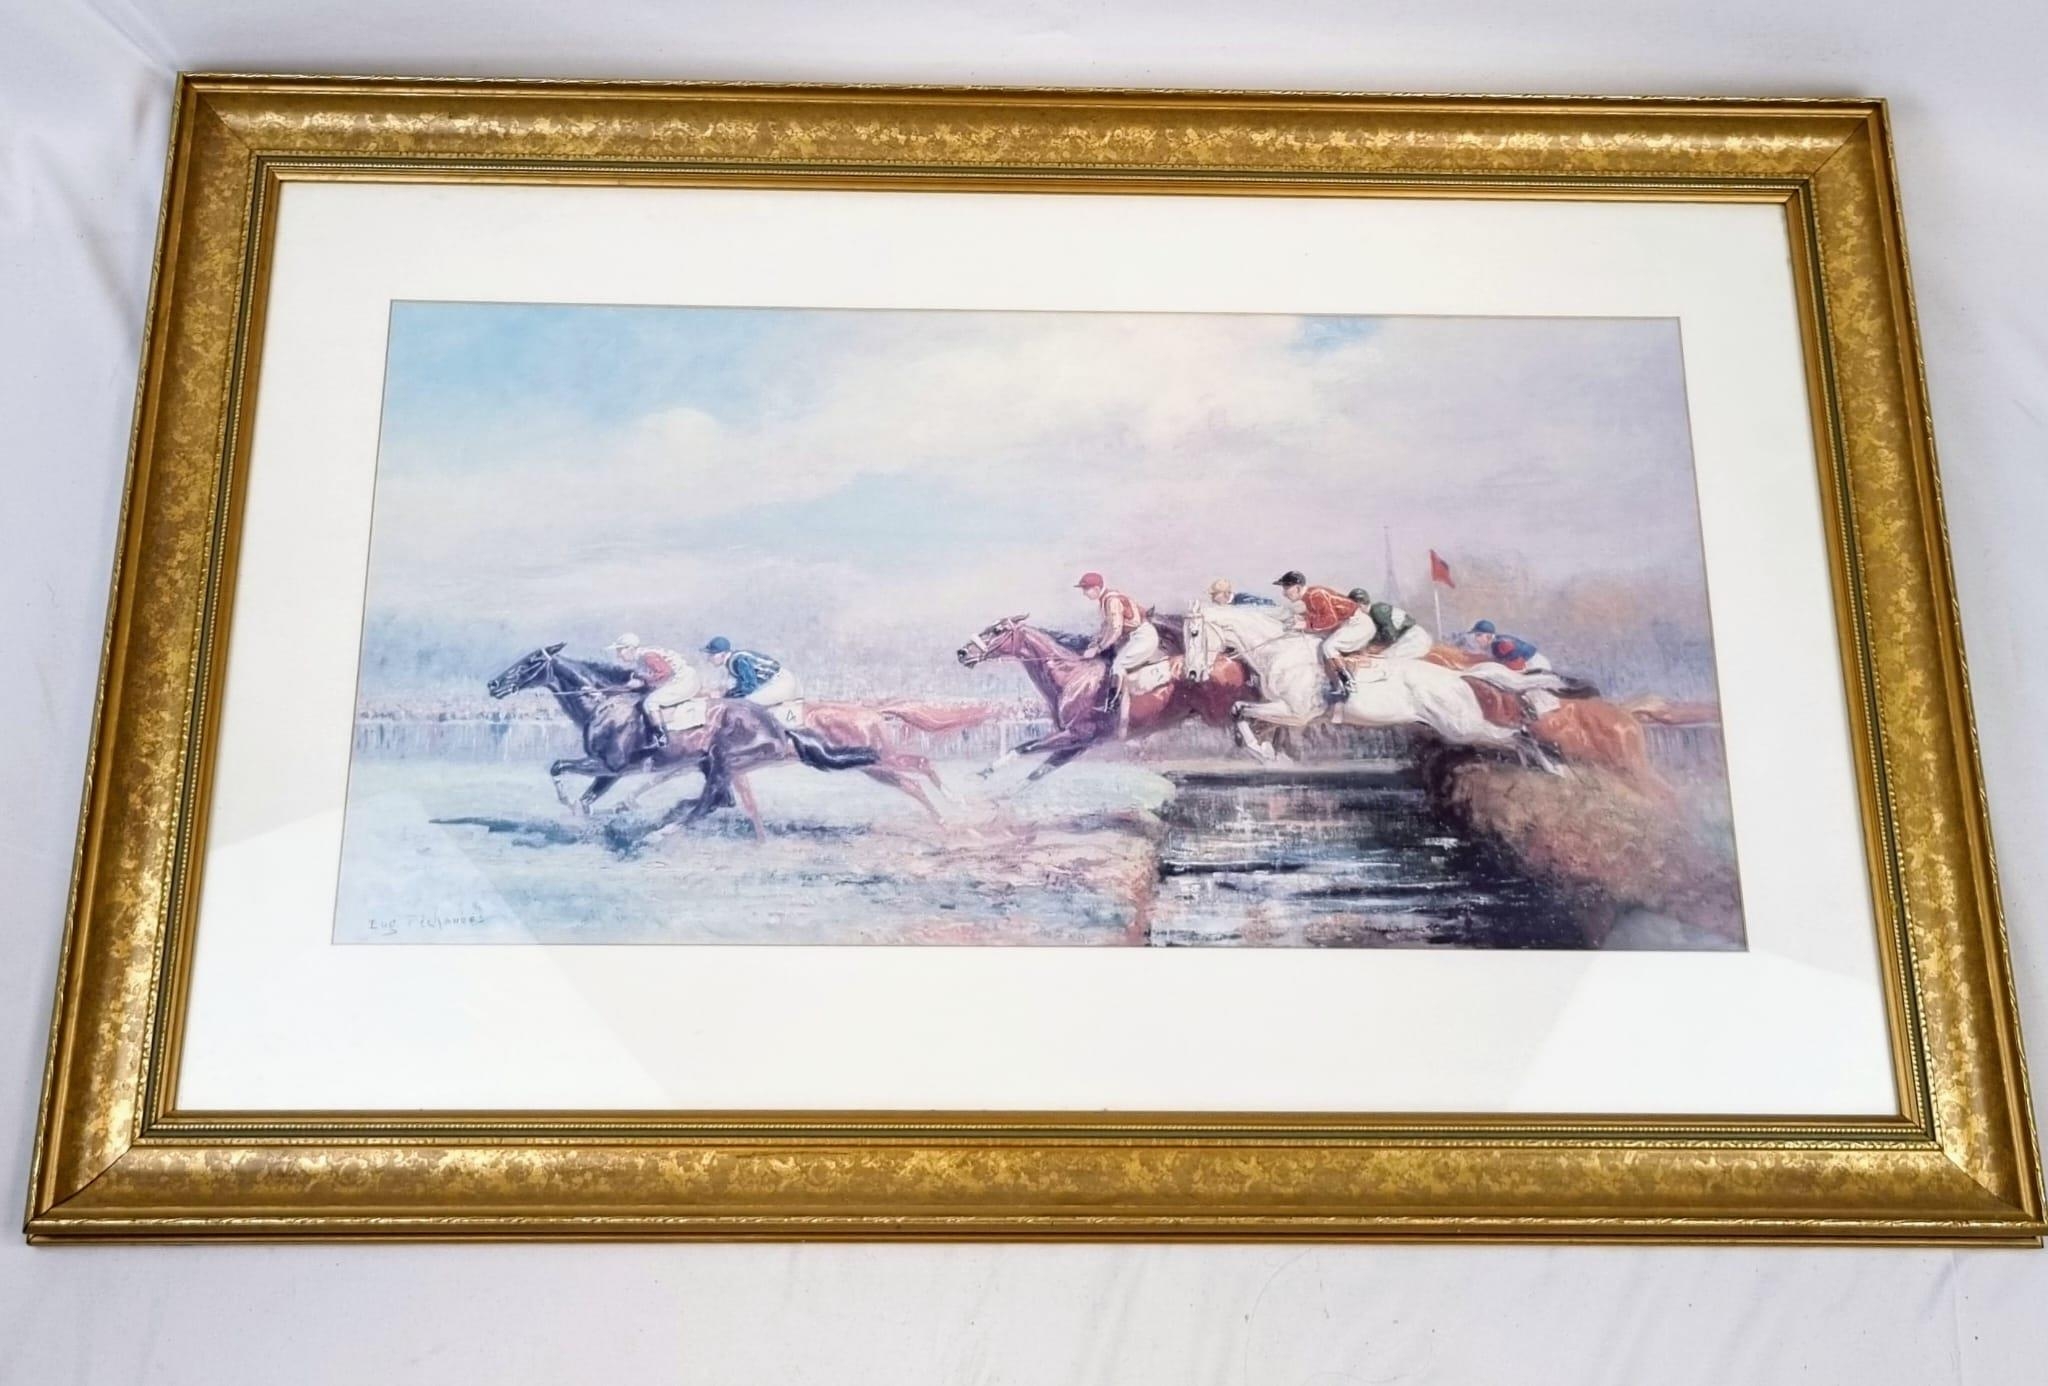 A Wonderful Eugene Pechaubes Horse Racing Print. In gilded frame - 102 x 65cm.